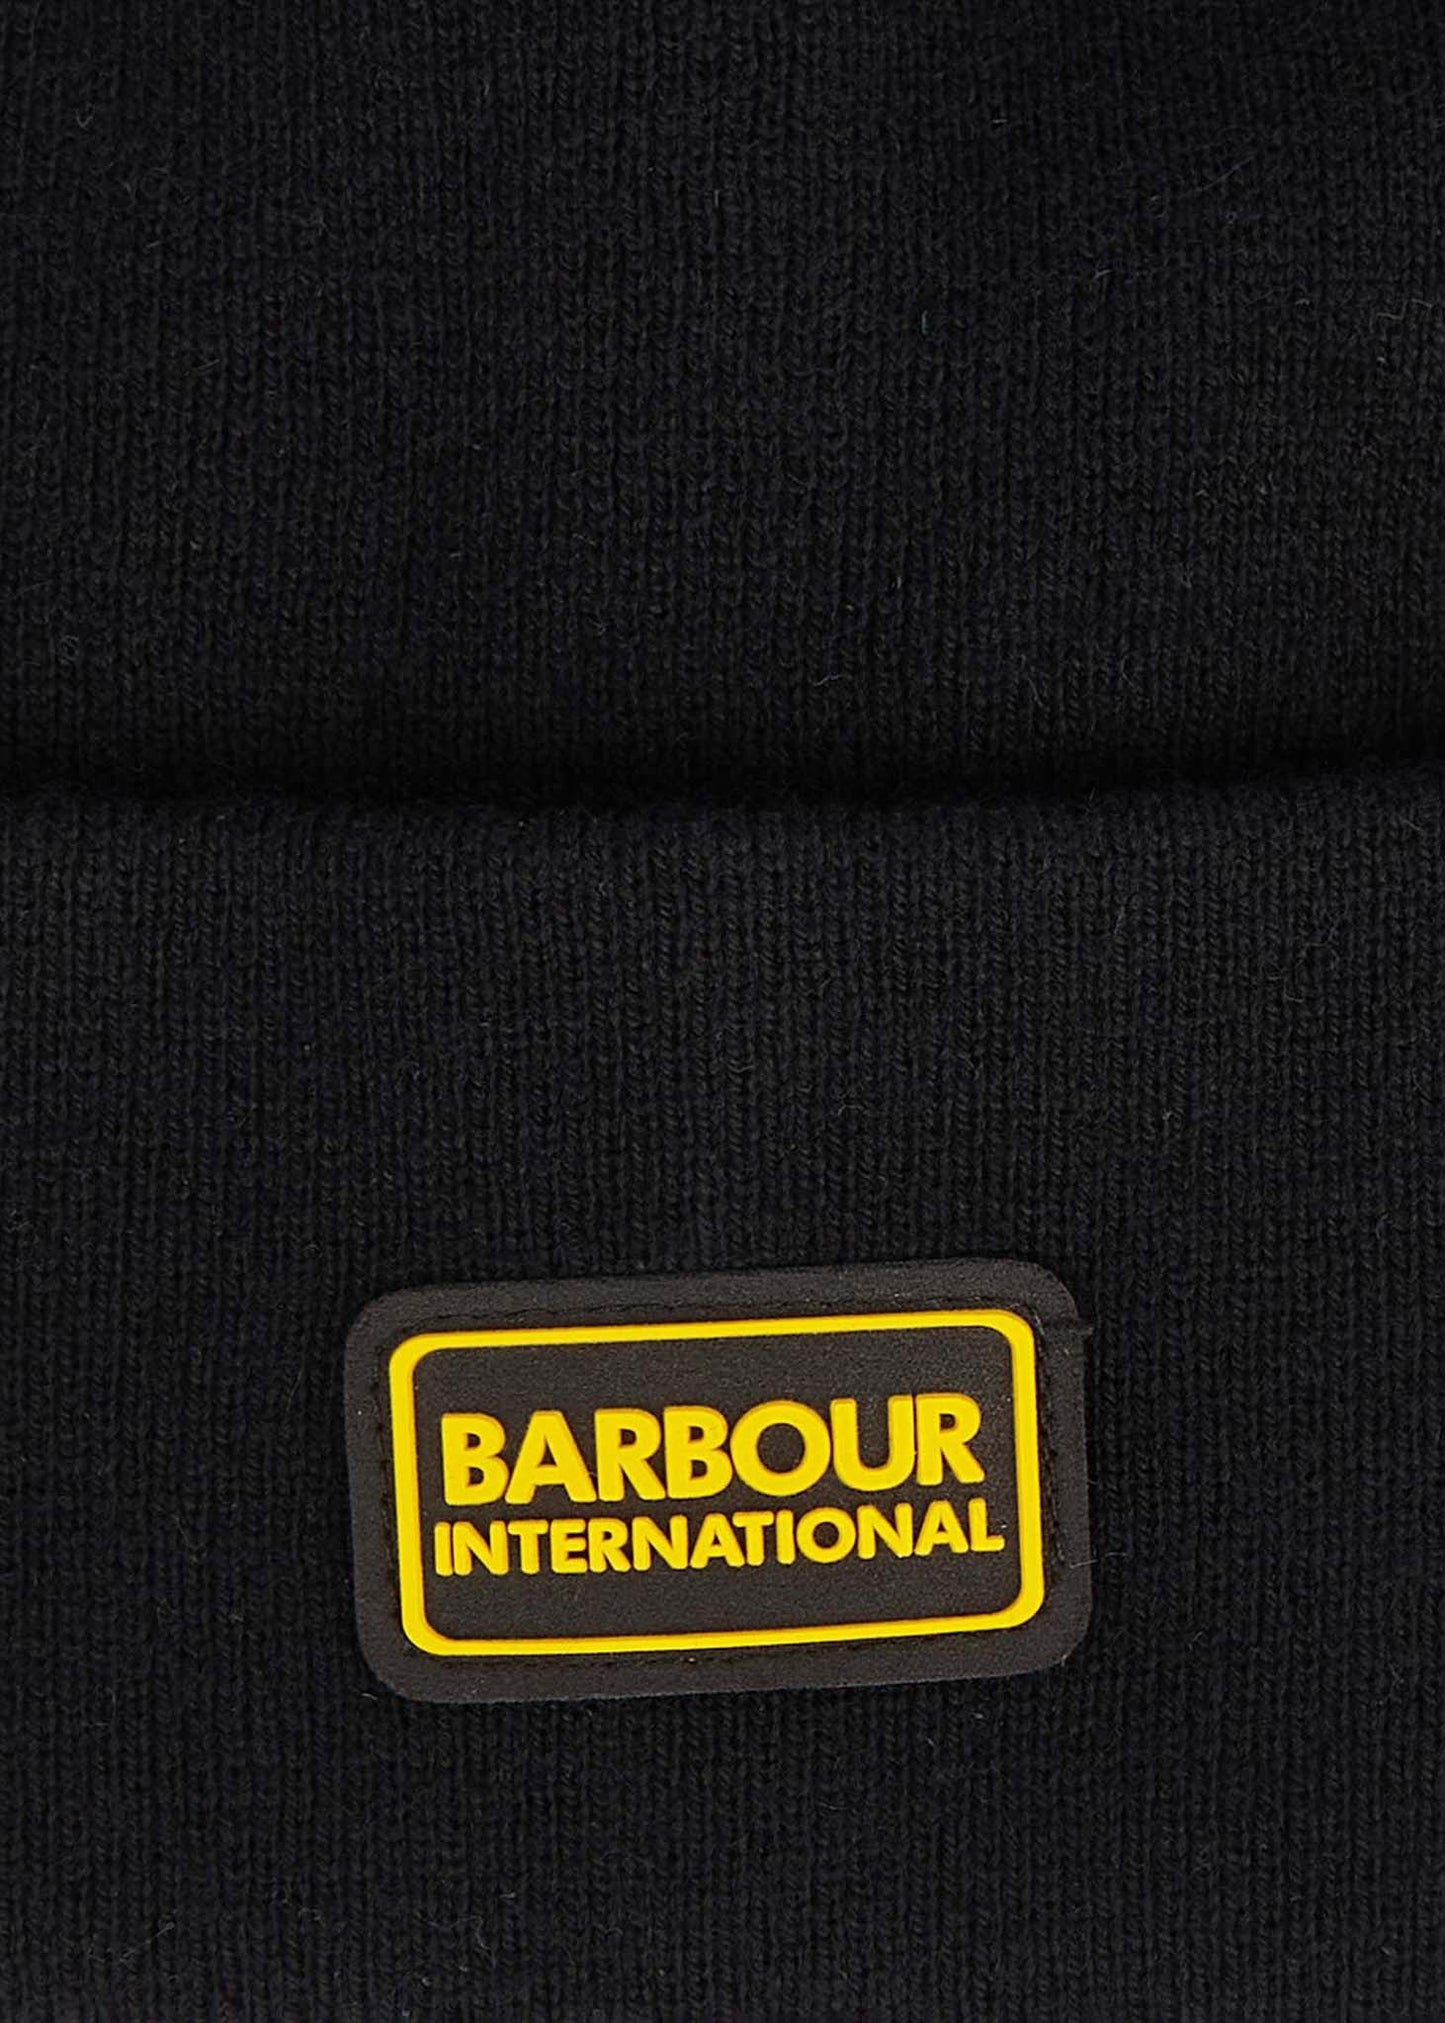 Barbour International beanie black